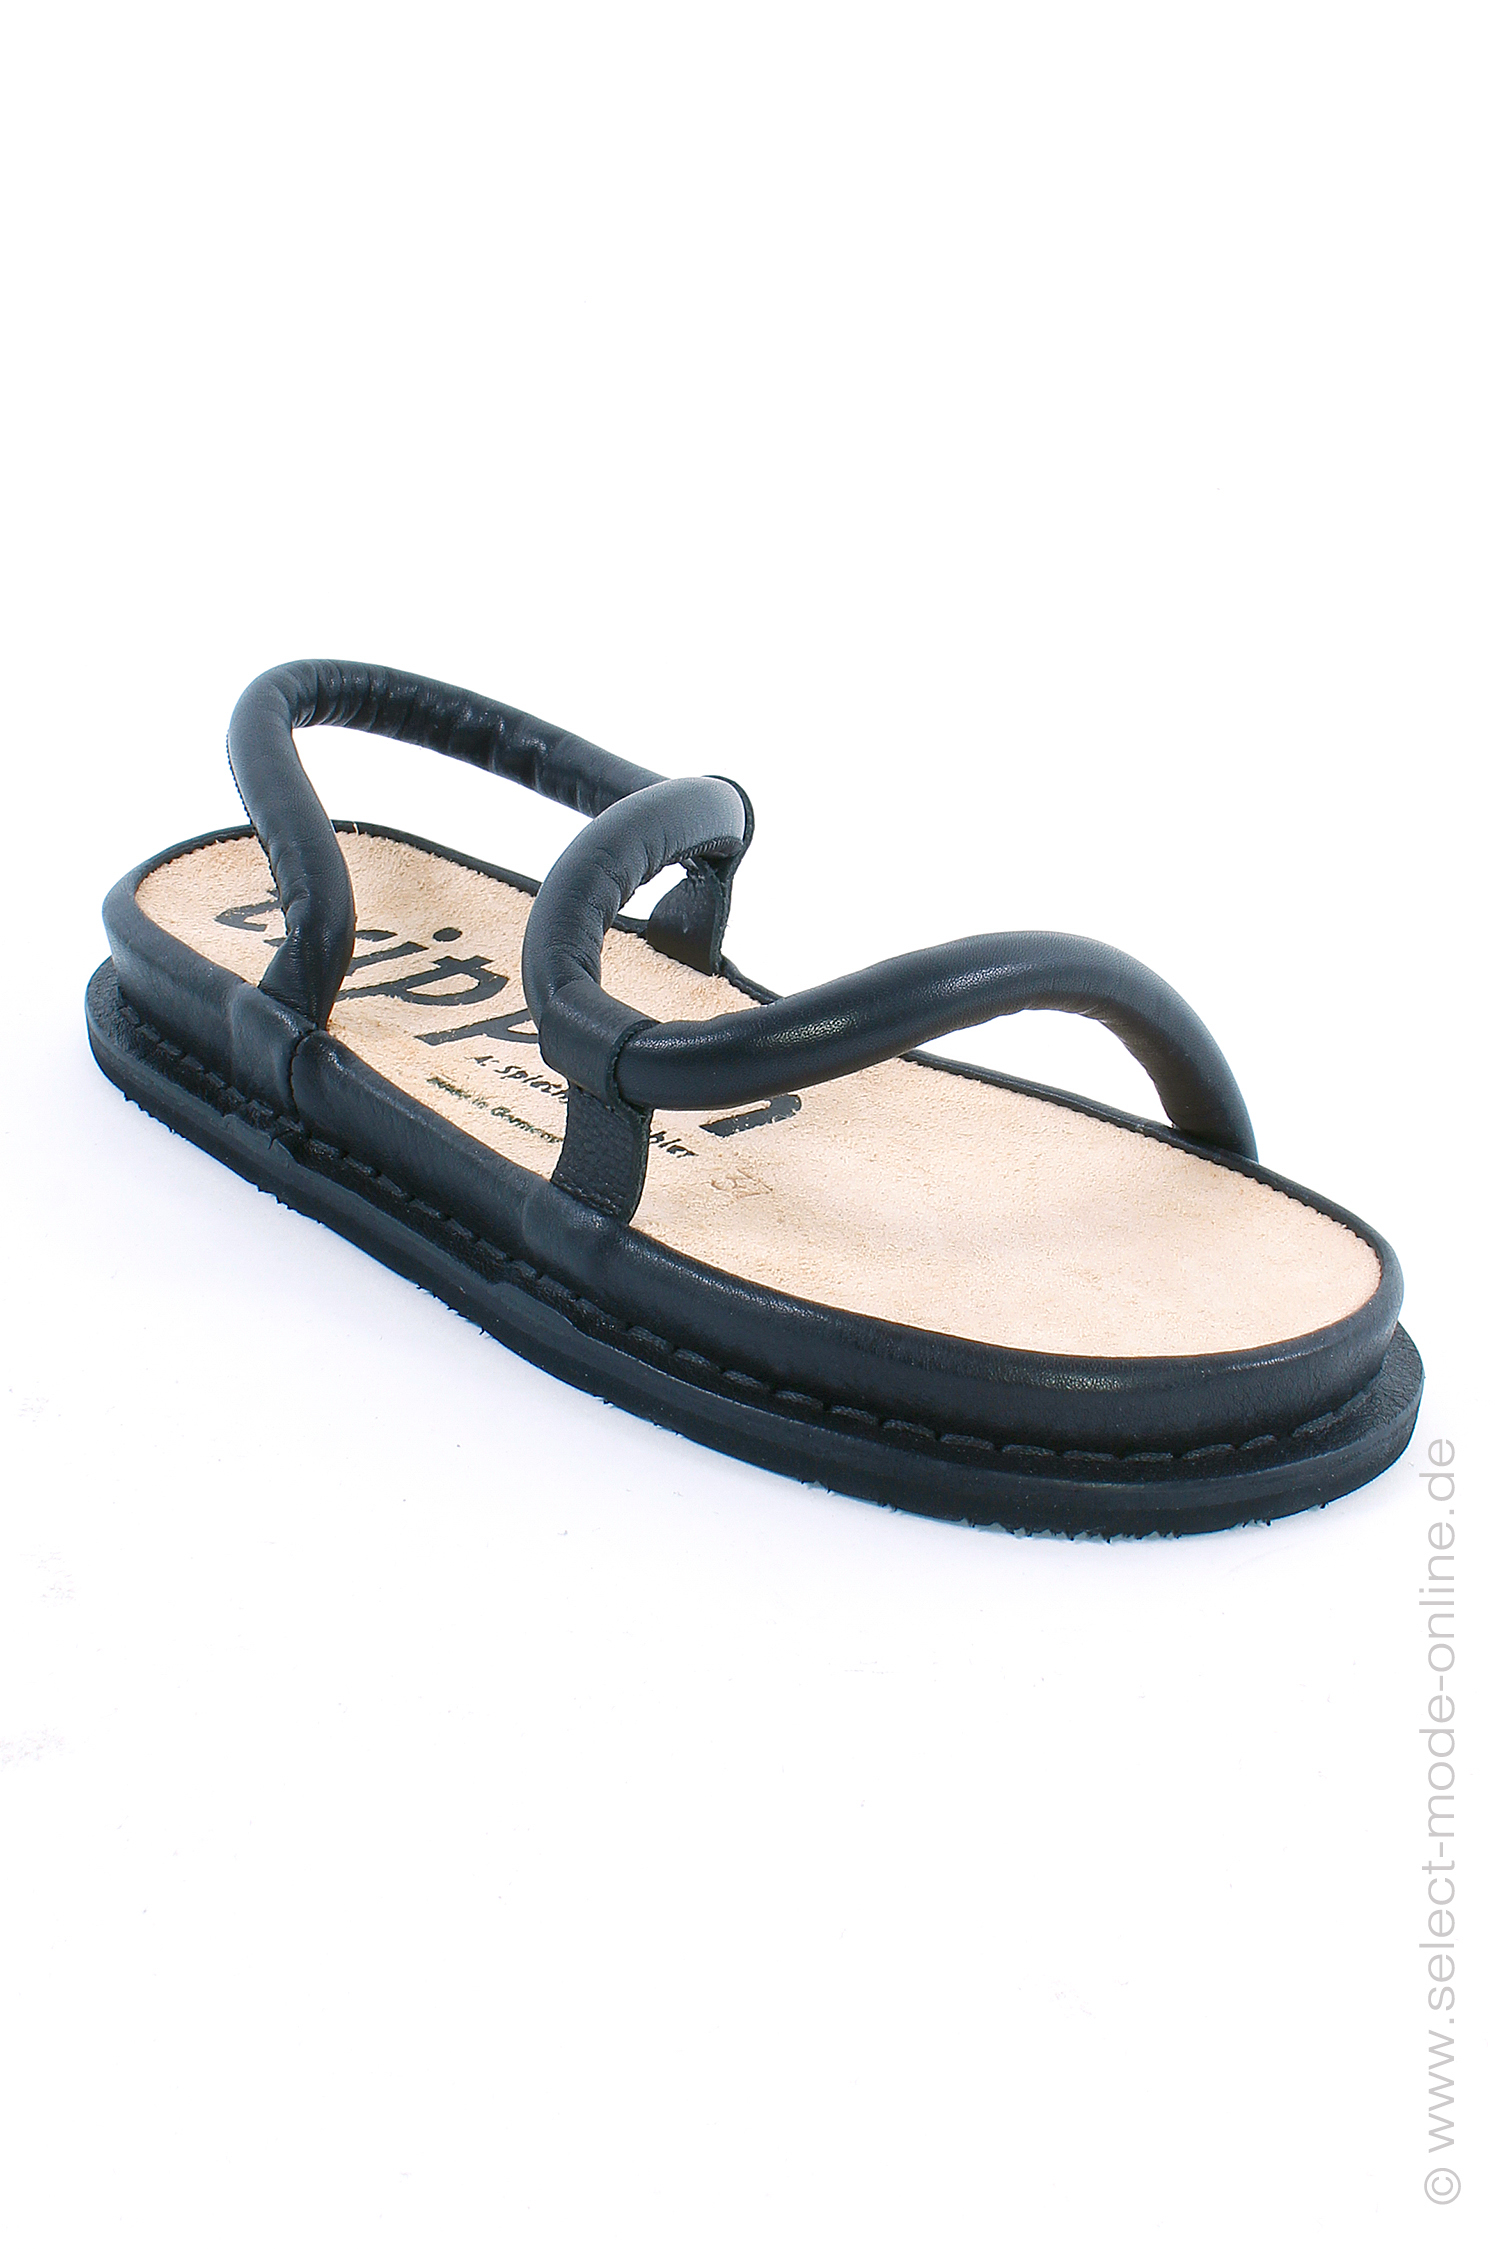 Leather sandals - Black - Zigzag